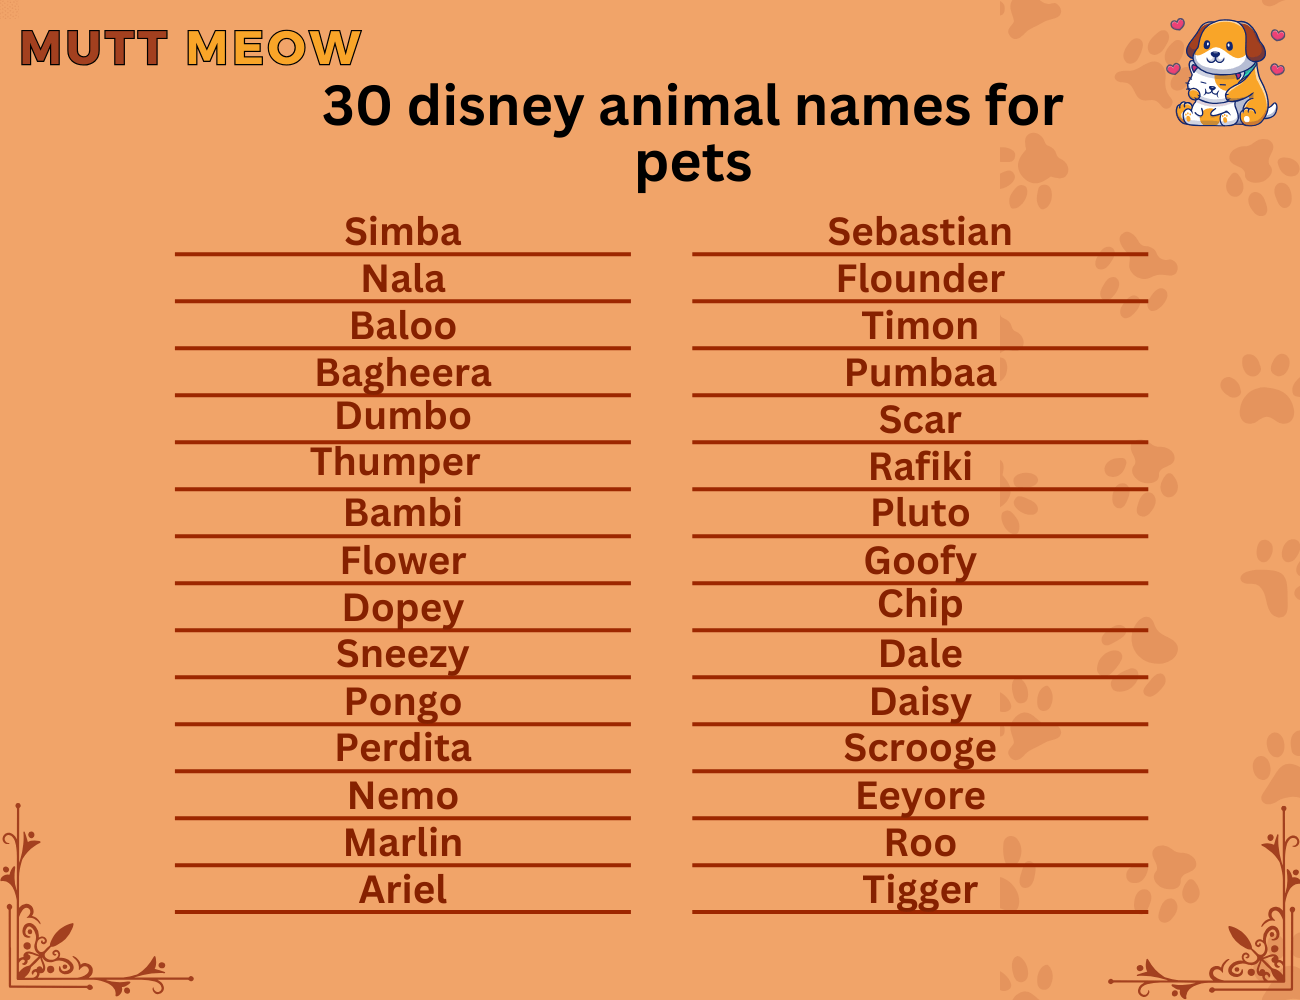 30 disney animal names for pets